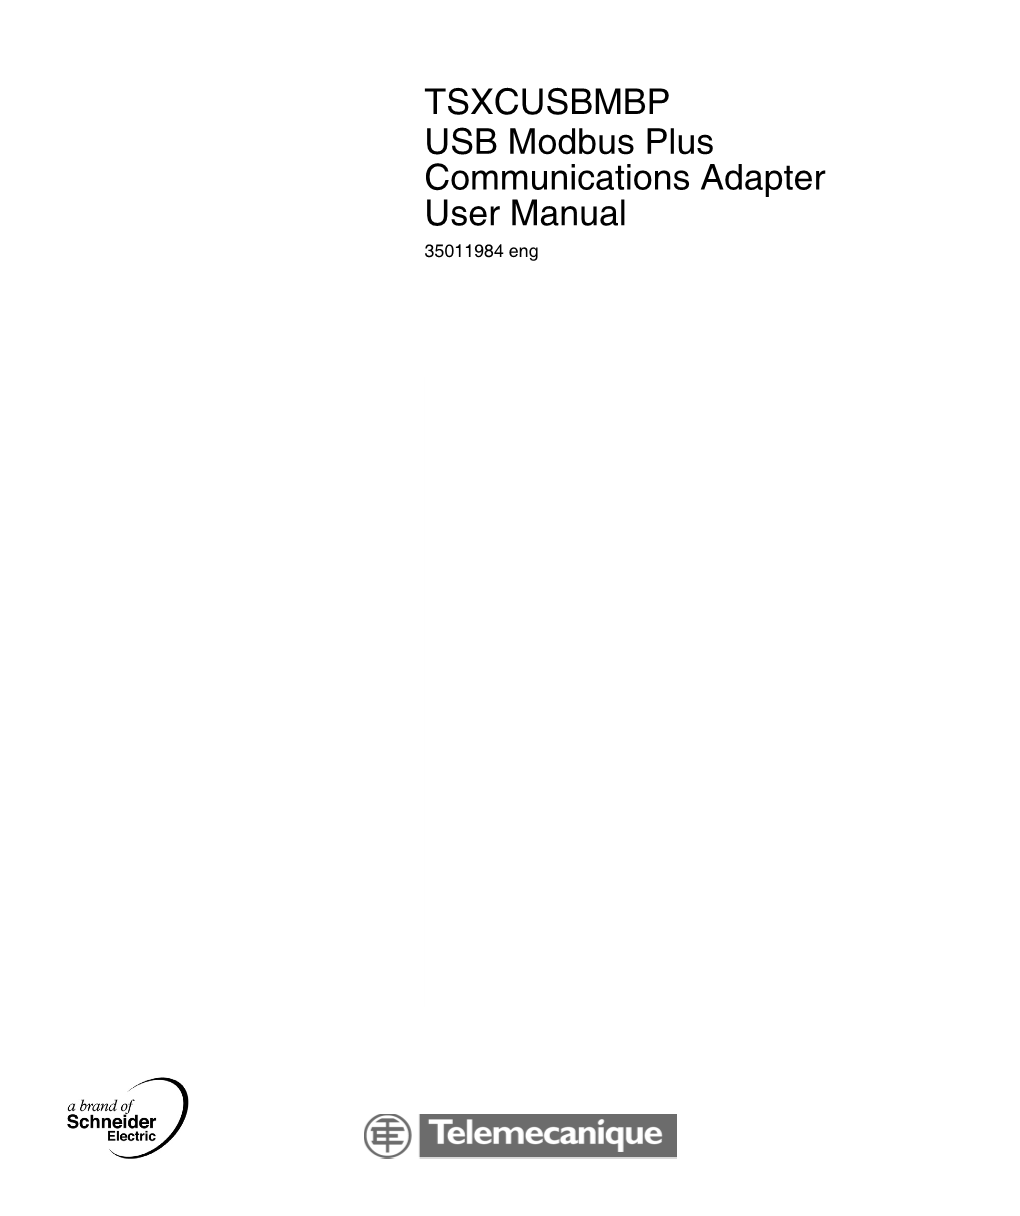 TSXCUSBMBP USB Modbus Plus Communications Adapter User